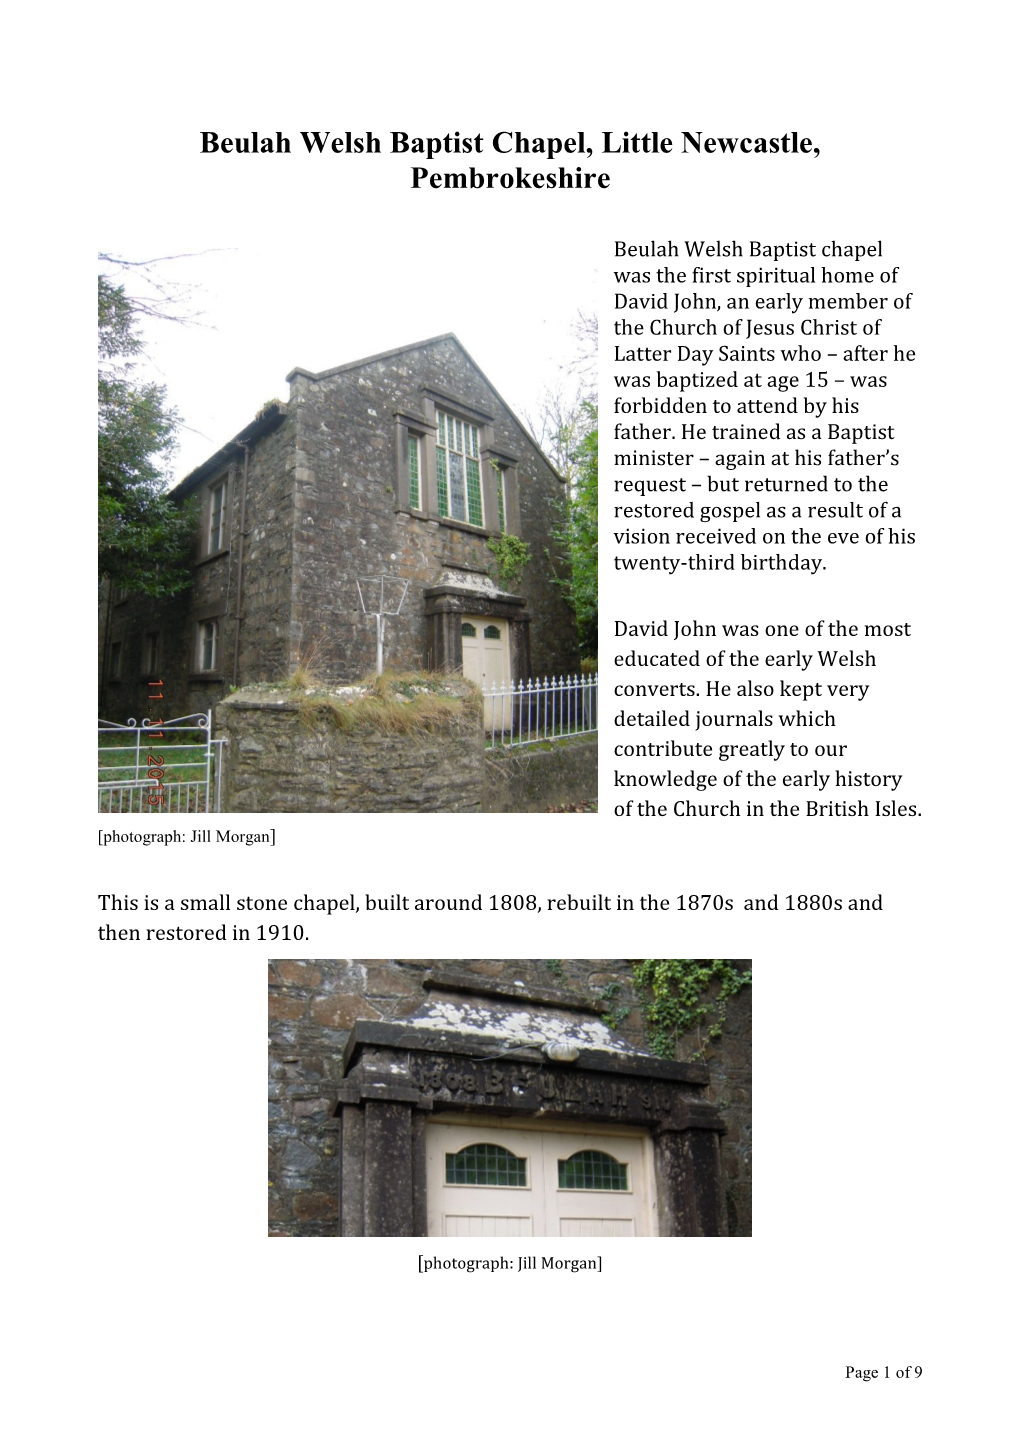 Beulah Welsh Baptist Chapel, Little Newcastle, Pembrokeshire